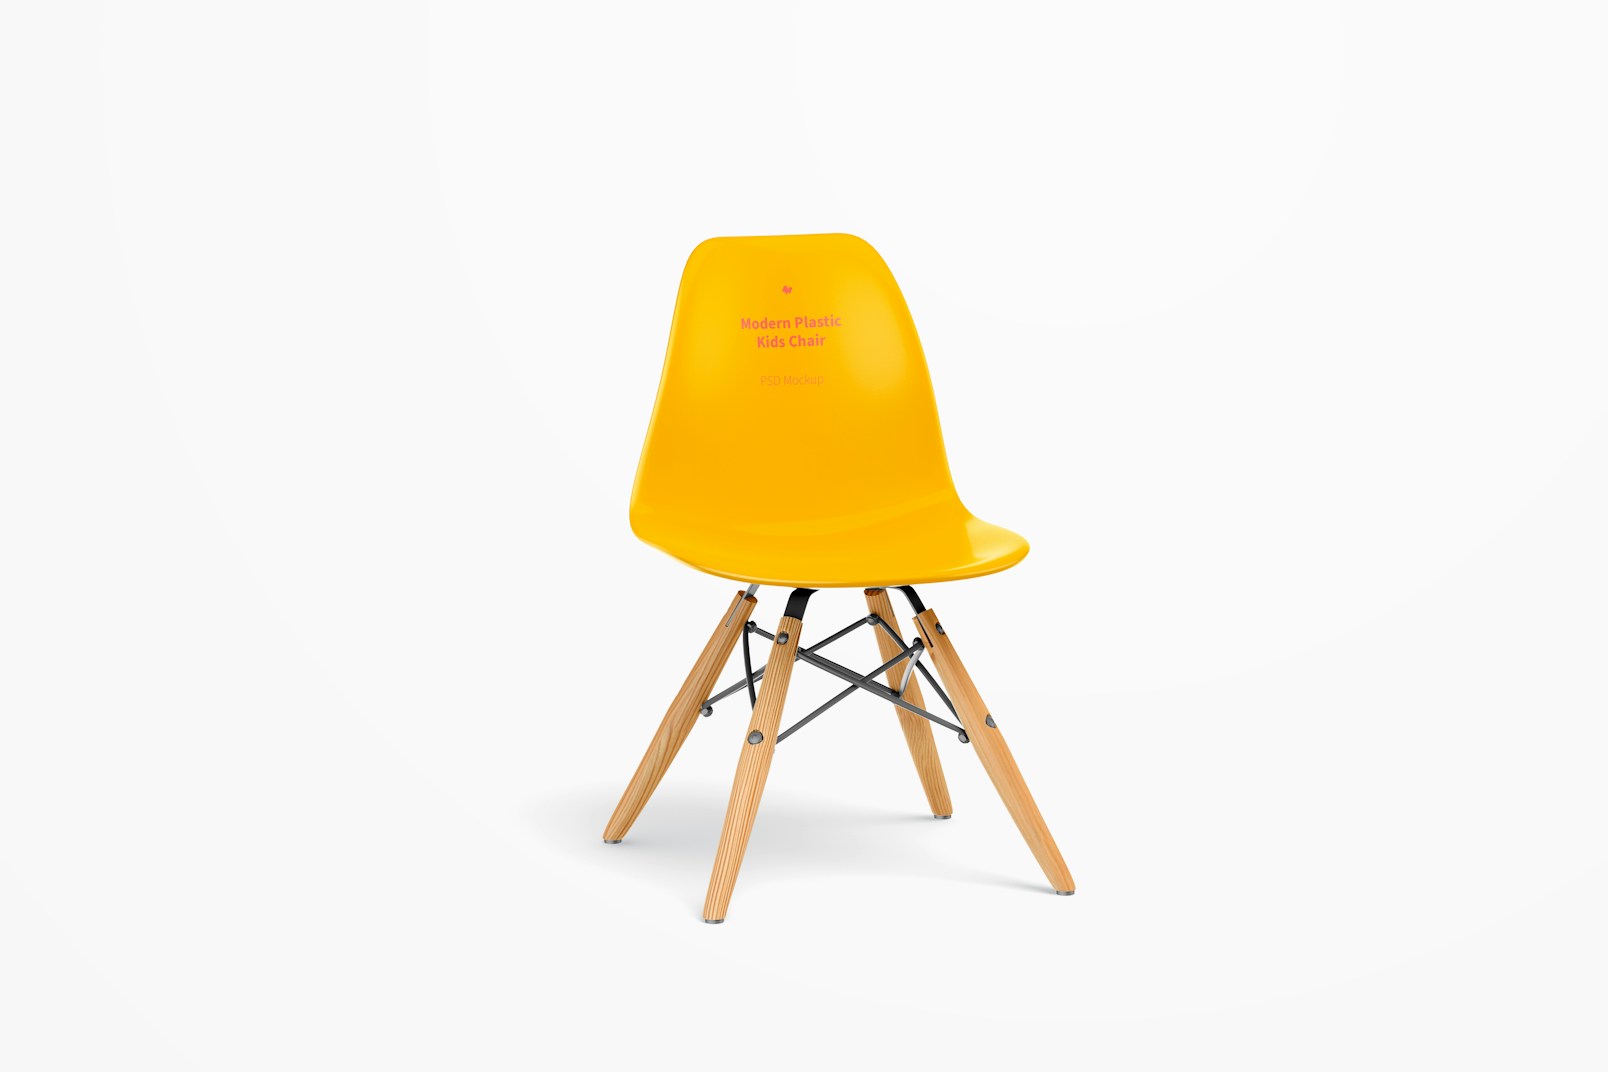 Modern Plastic Kids Chair Mockup